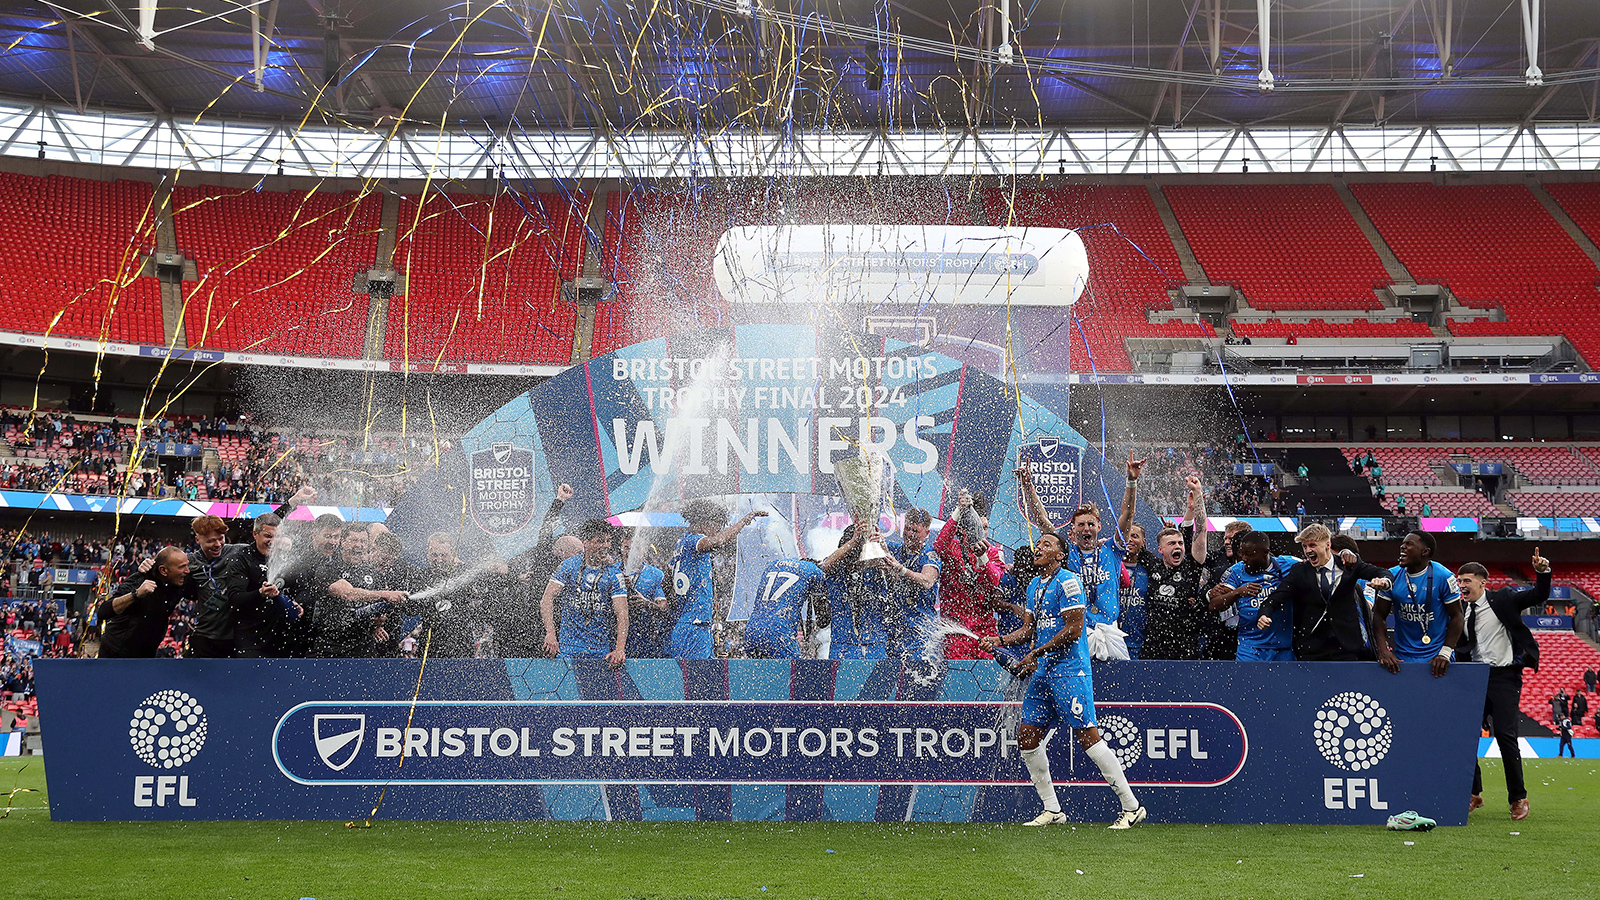 Posh win the Bristol Street Motors Trophy